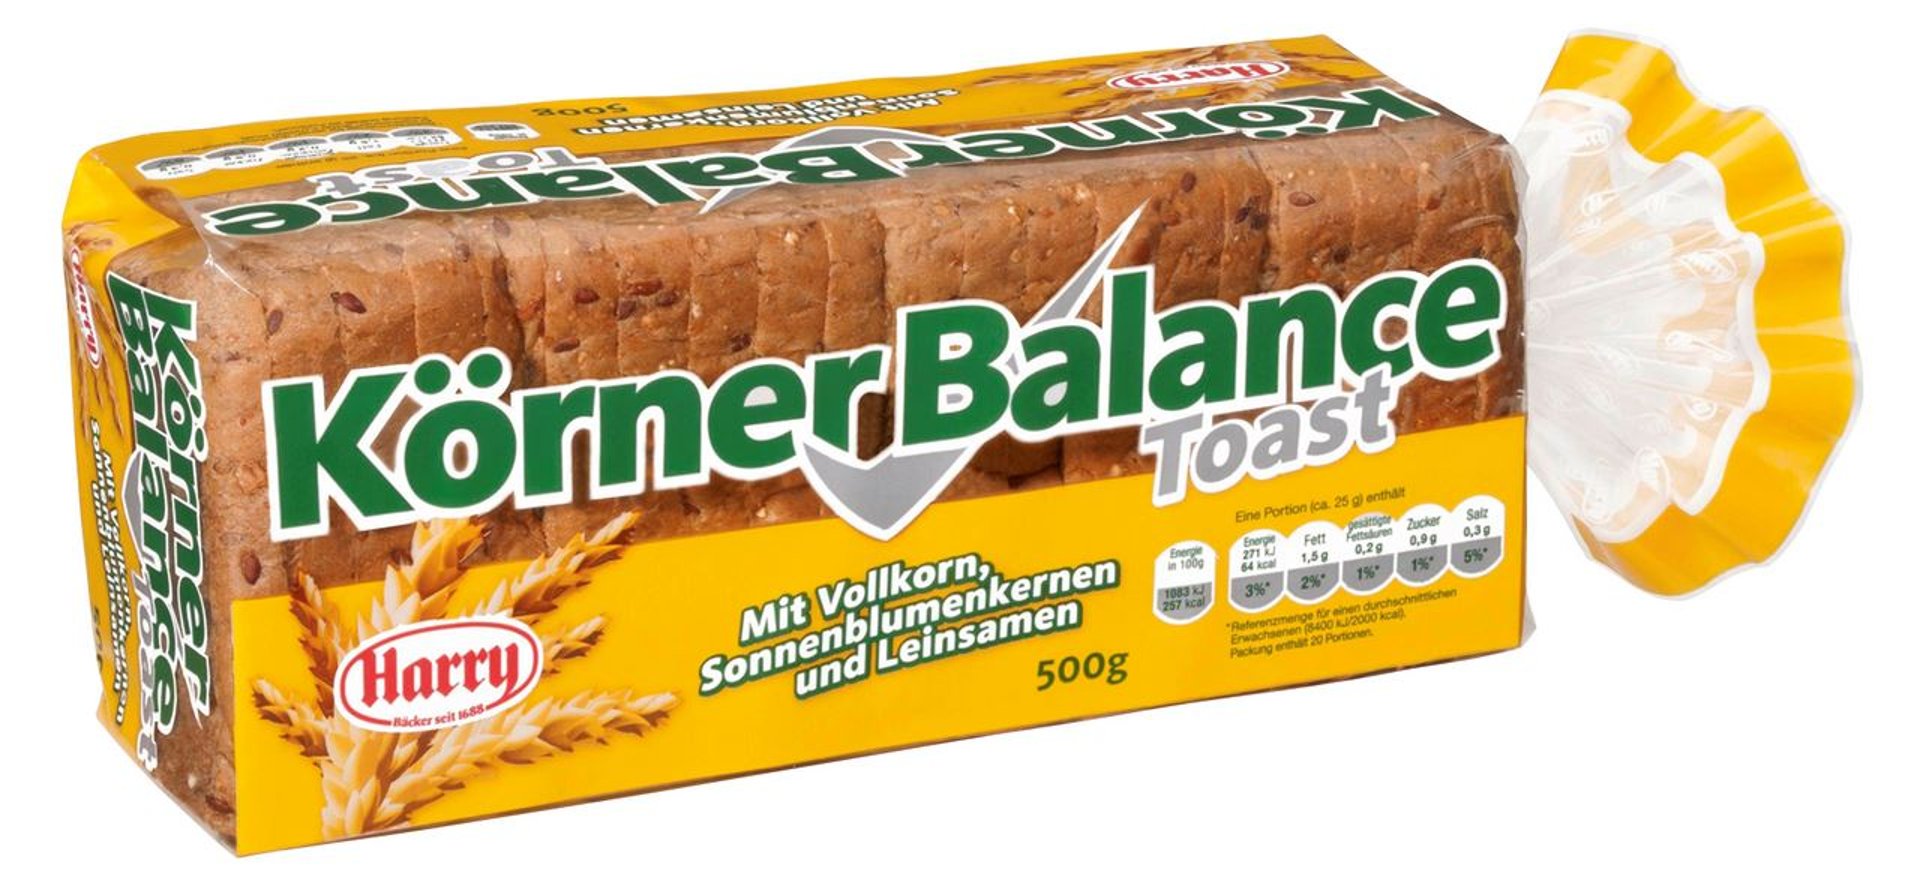 Harry - Körner Balance-Toast - 500 g Beutel